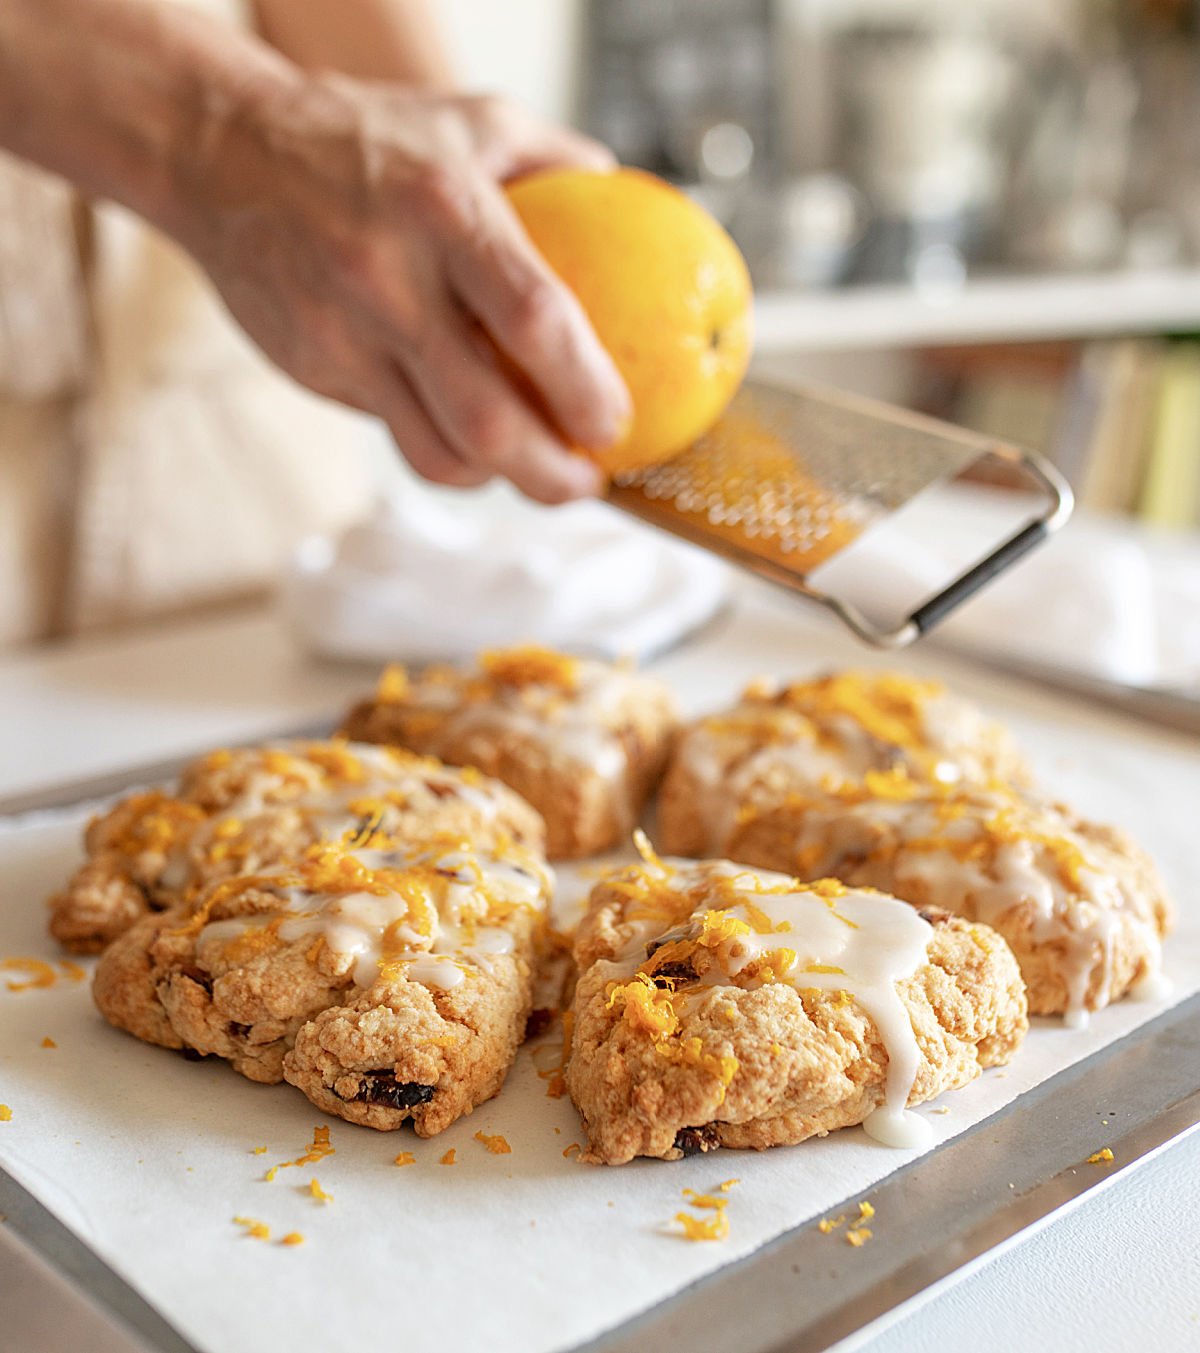 Grating orange peel over glazed scones on white paper and metal sheet pan.